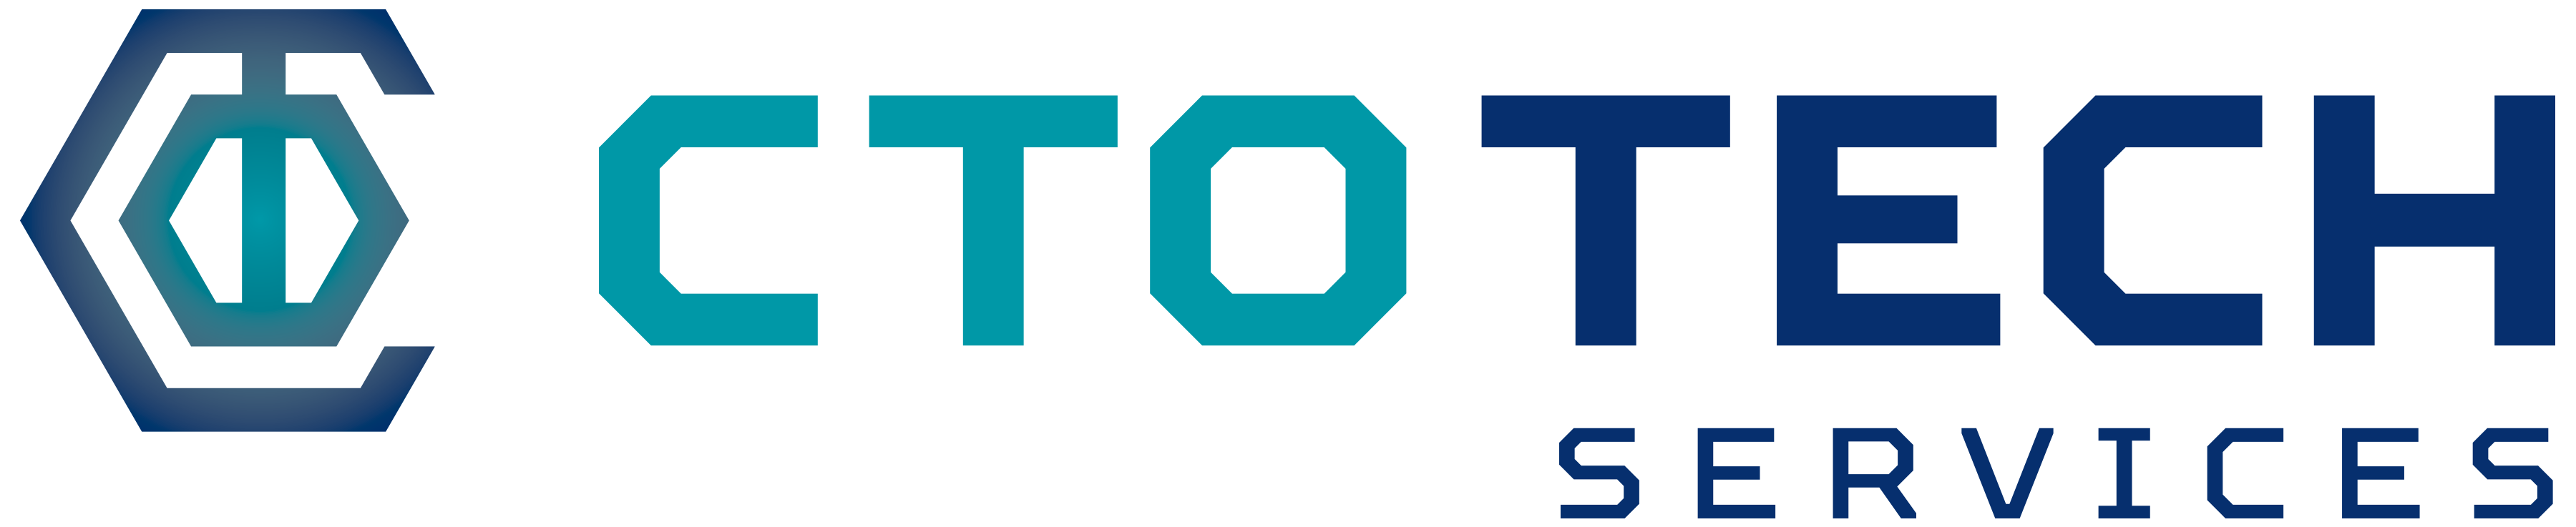 CTOTech-logo-transparent